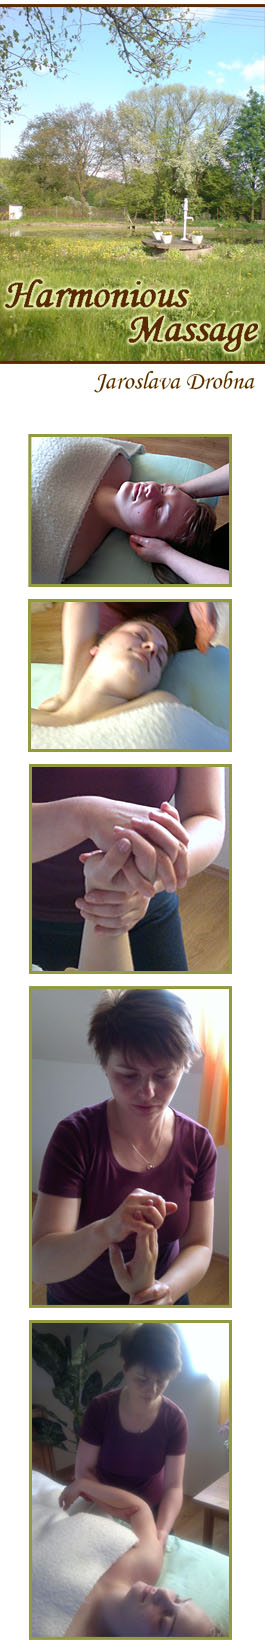 Profile picture for Harmonious Massage